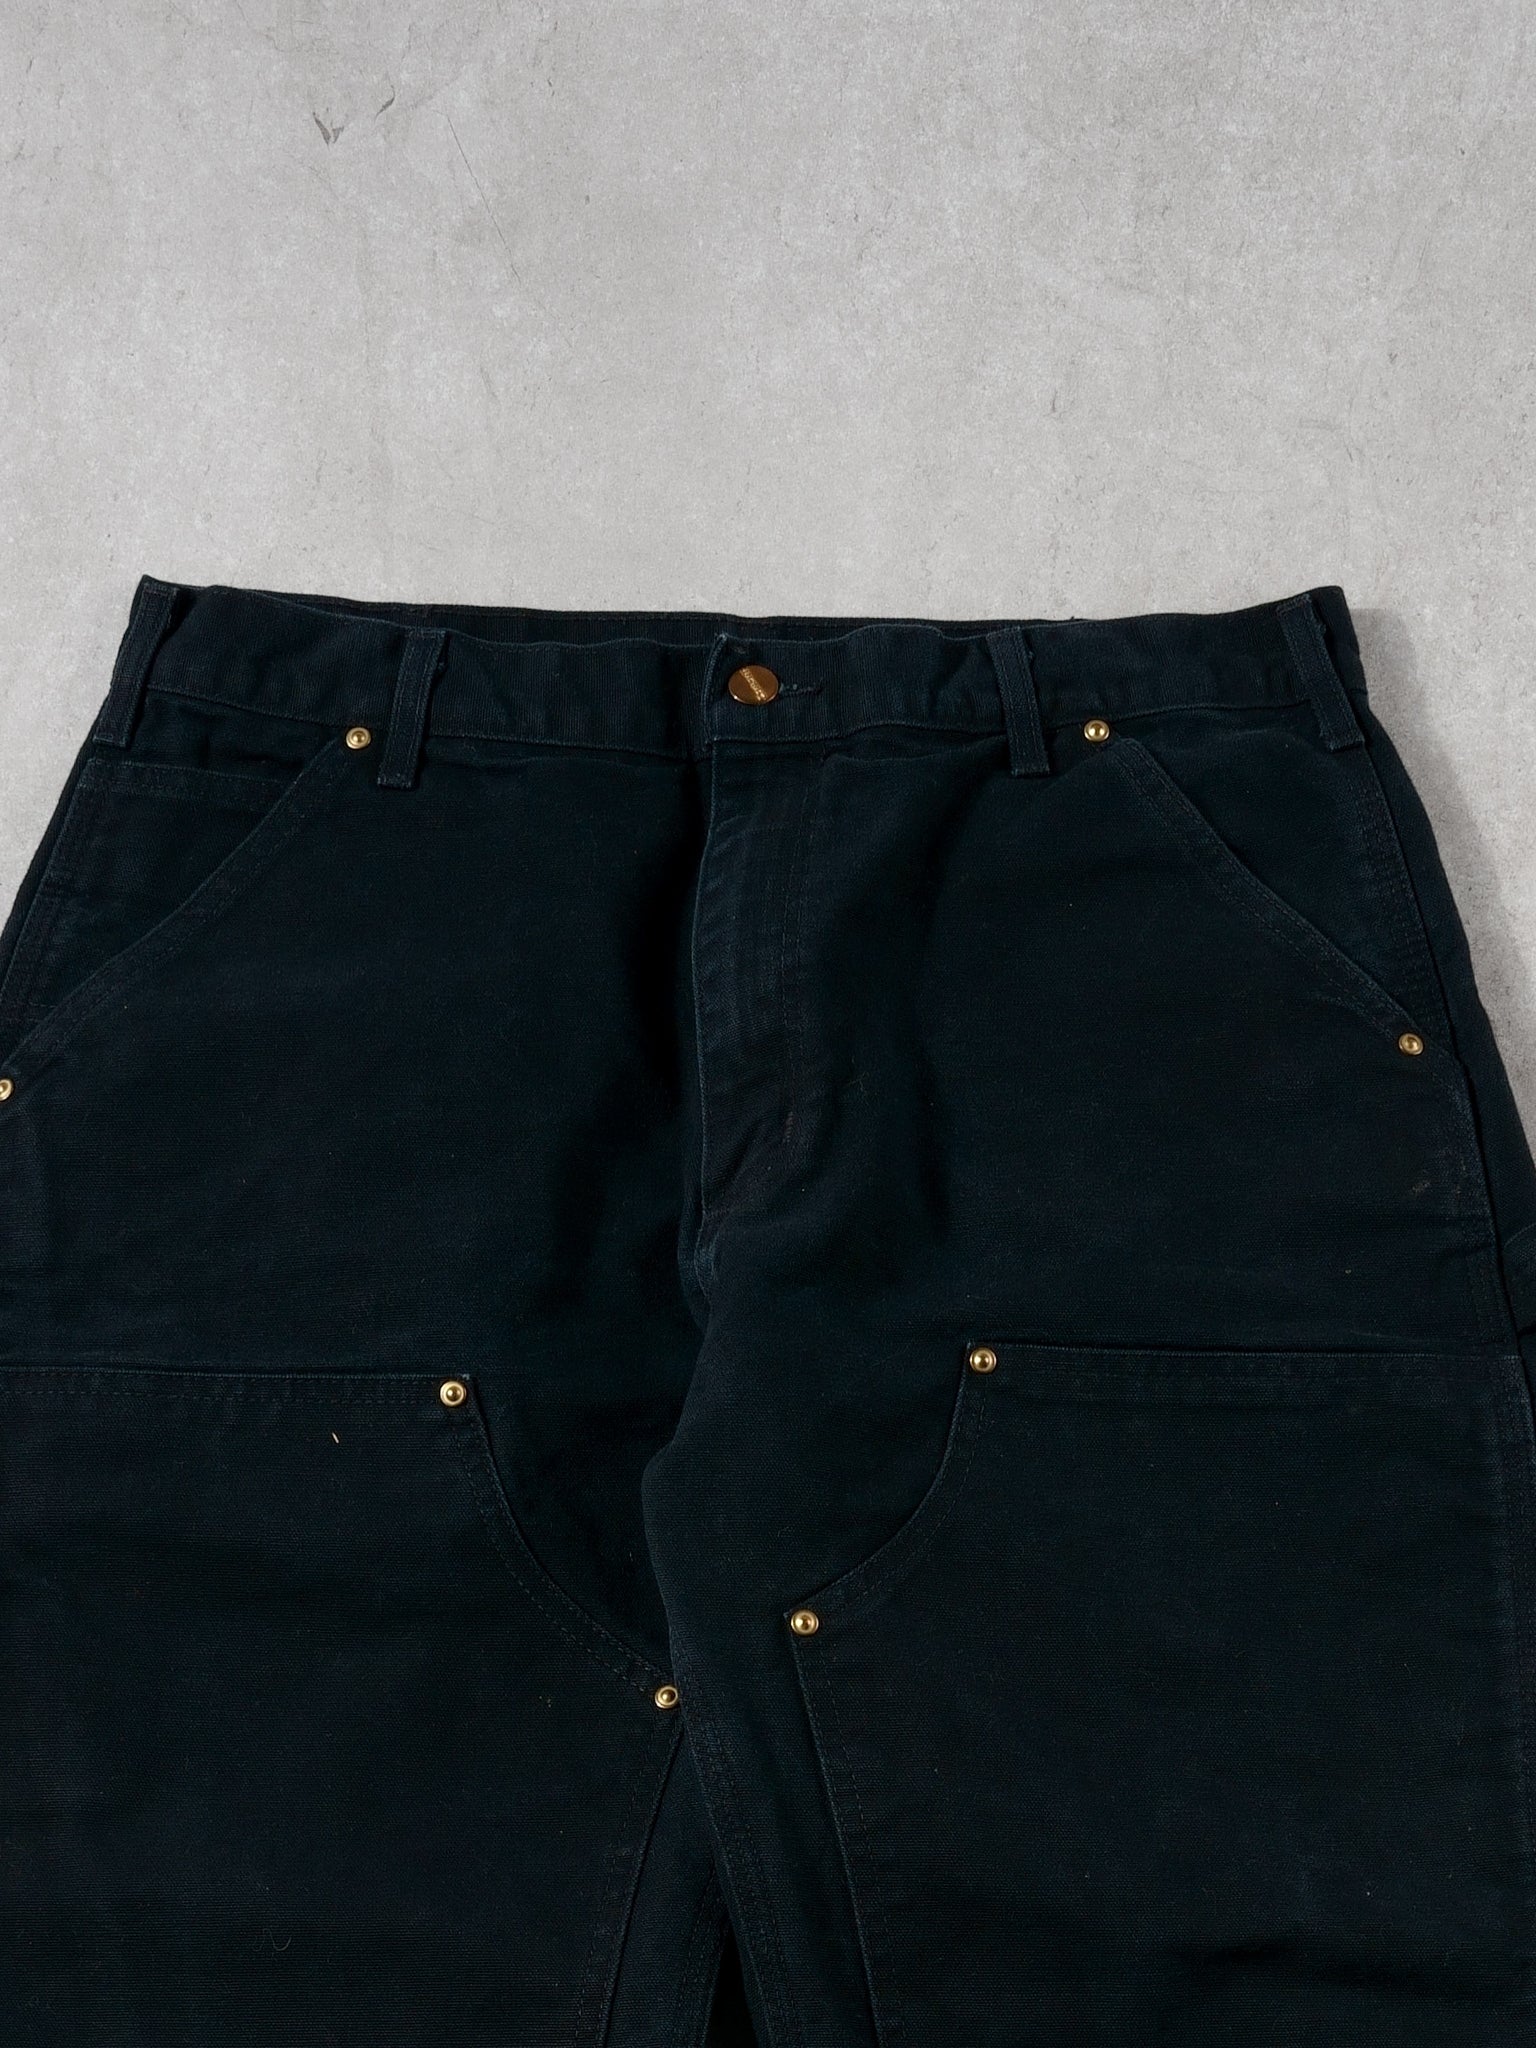 Vintage 90s Black Carhartt Double Knee Carpenter Pants (32x29)